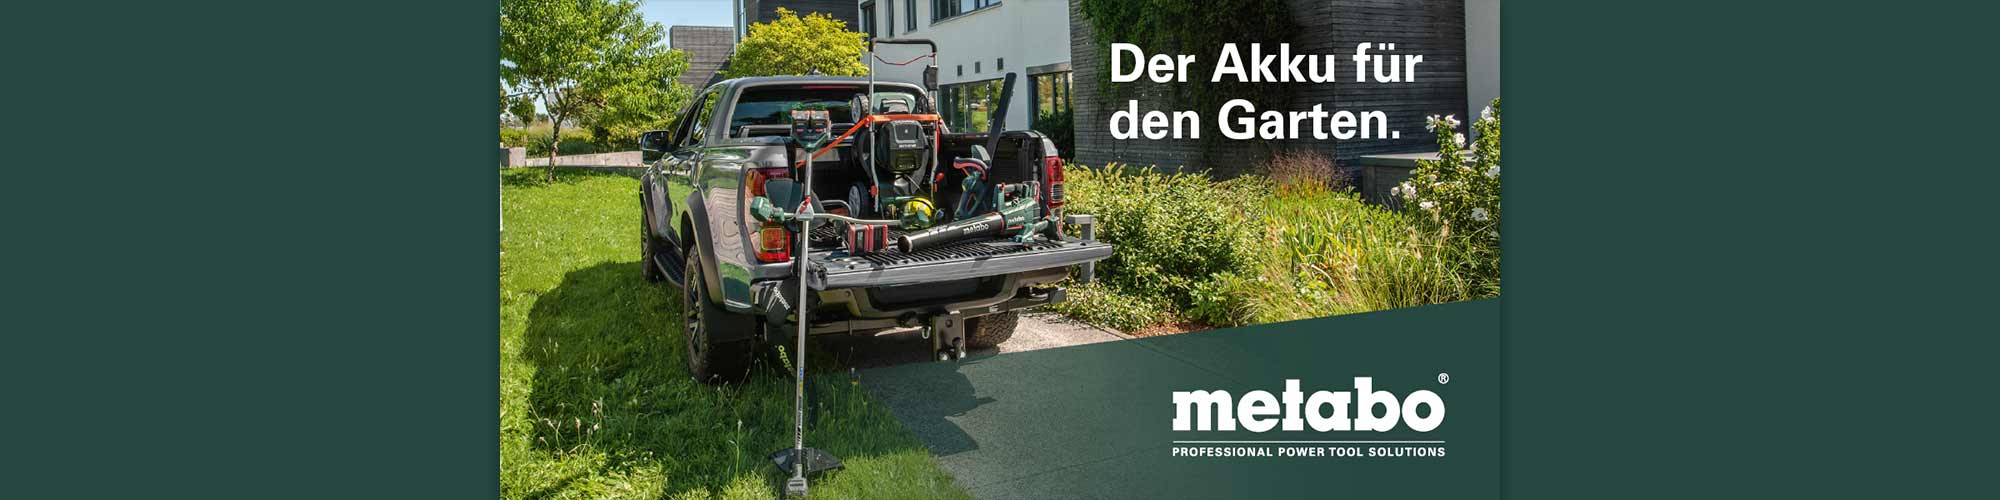 METABO Gartenwelt - Alle Gartengeräte